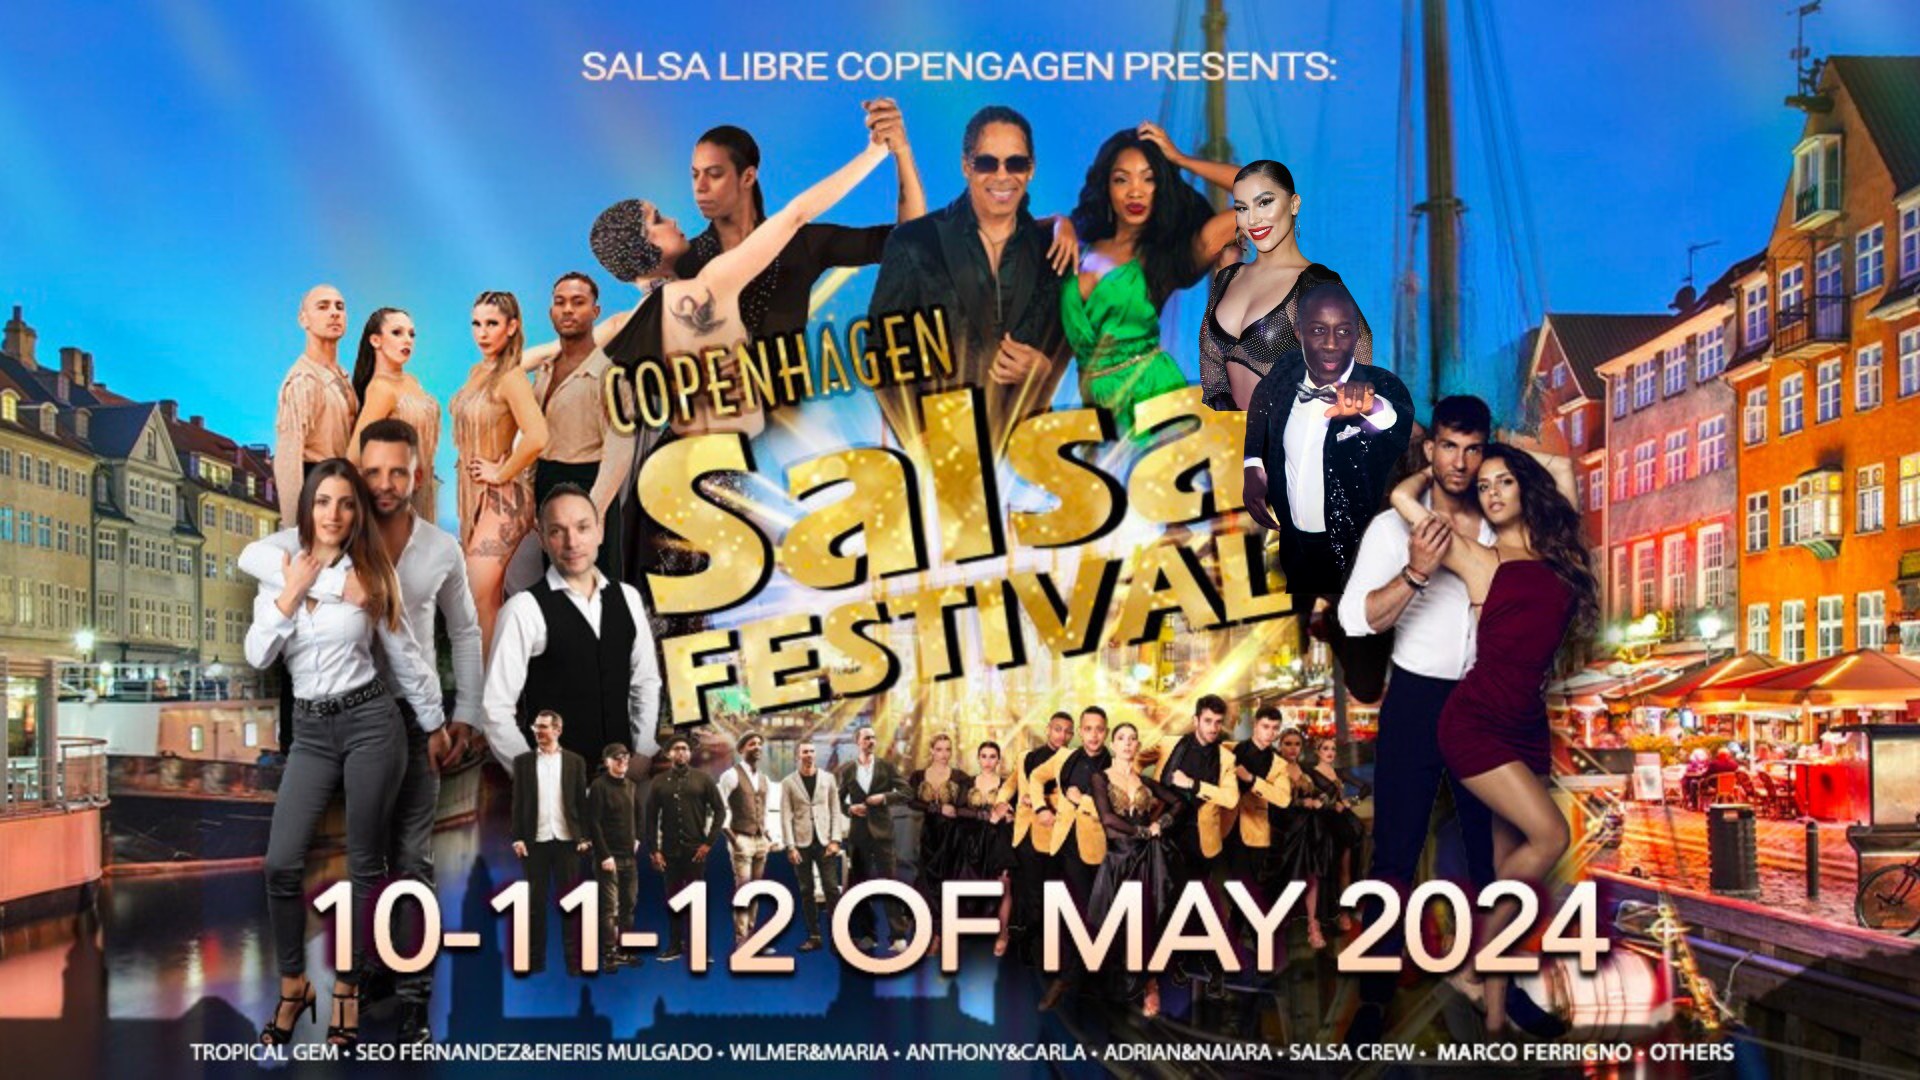 Copenhagen Salsa Festival